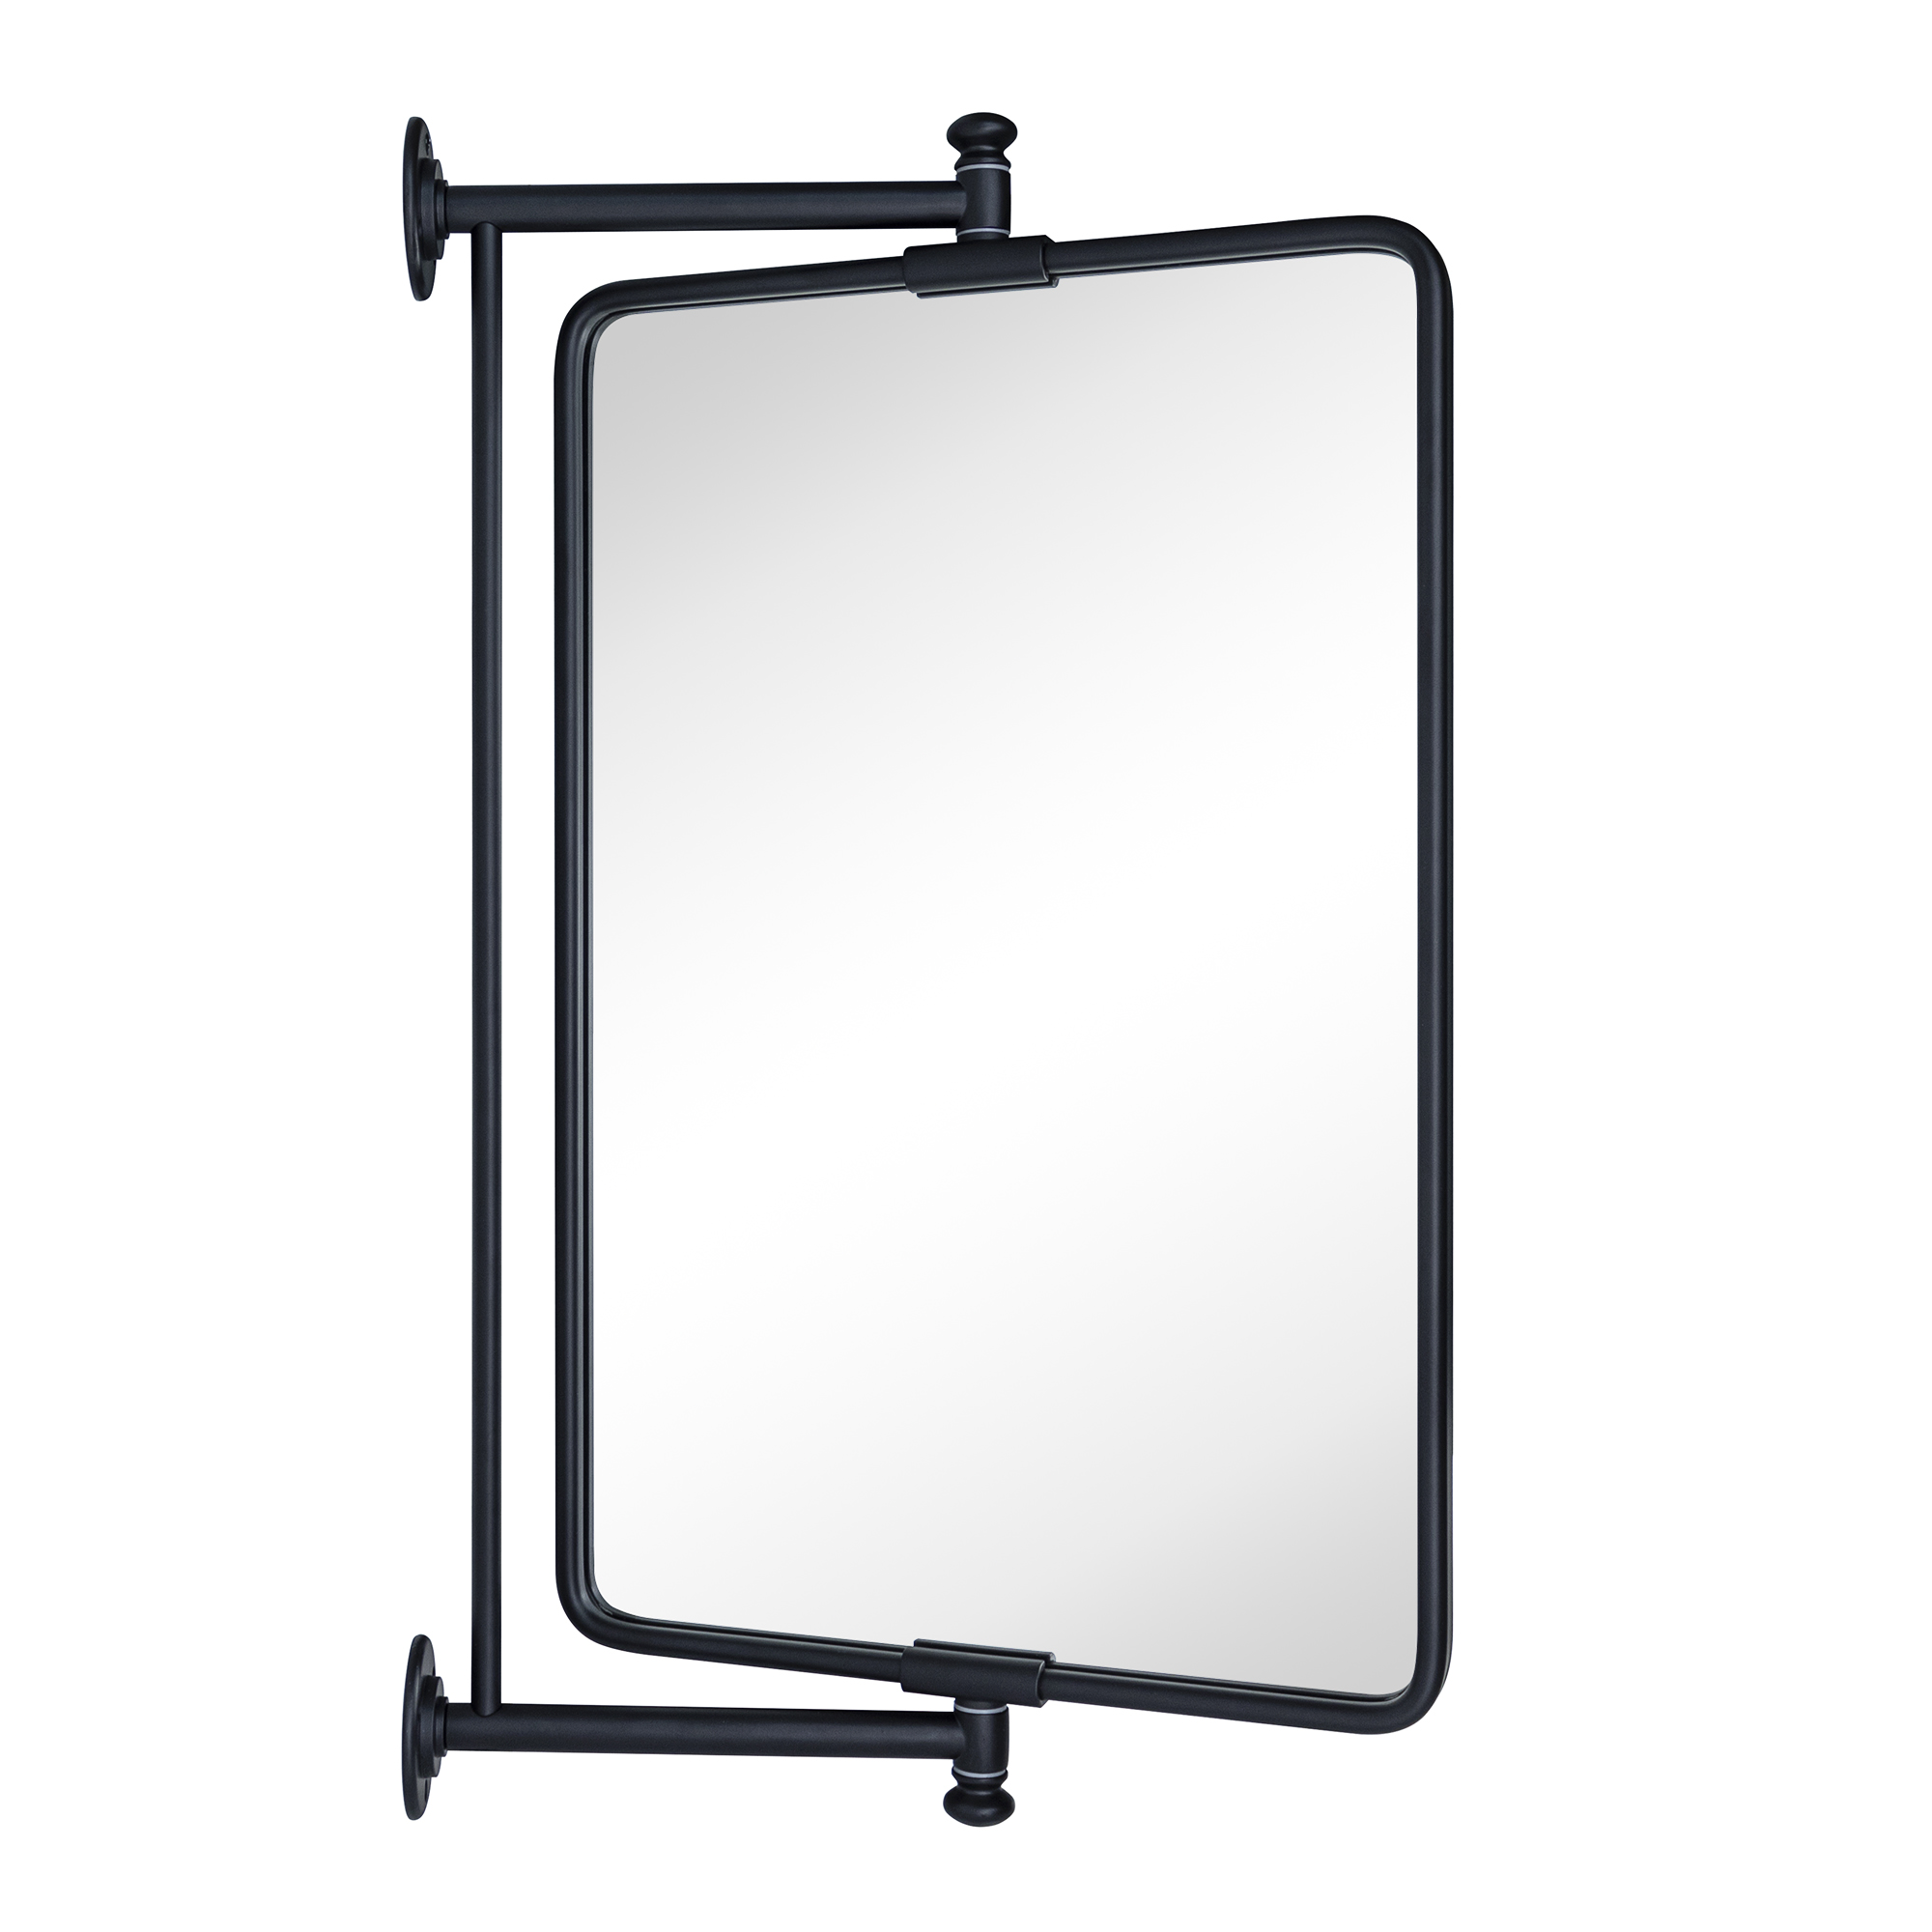 Correon Pivot-N-View Rectangle Mirror for Window Bathroom Vanity